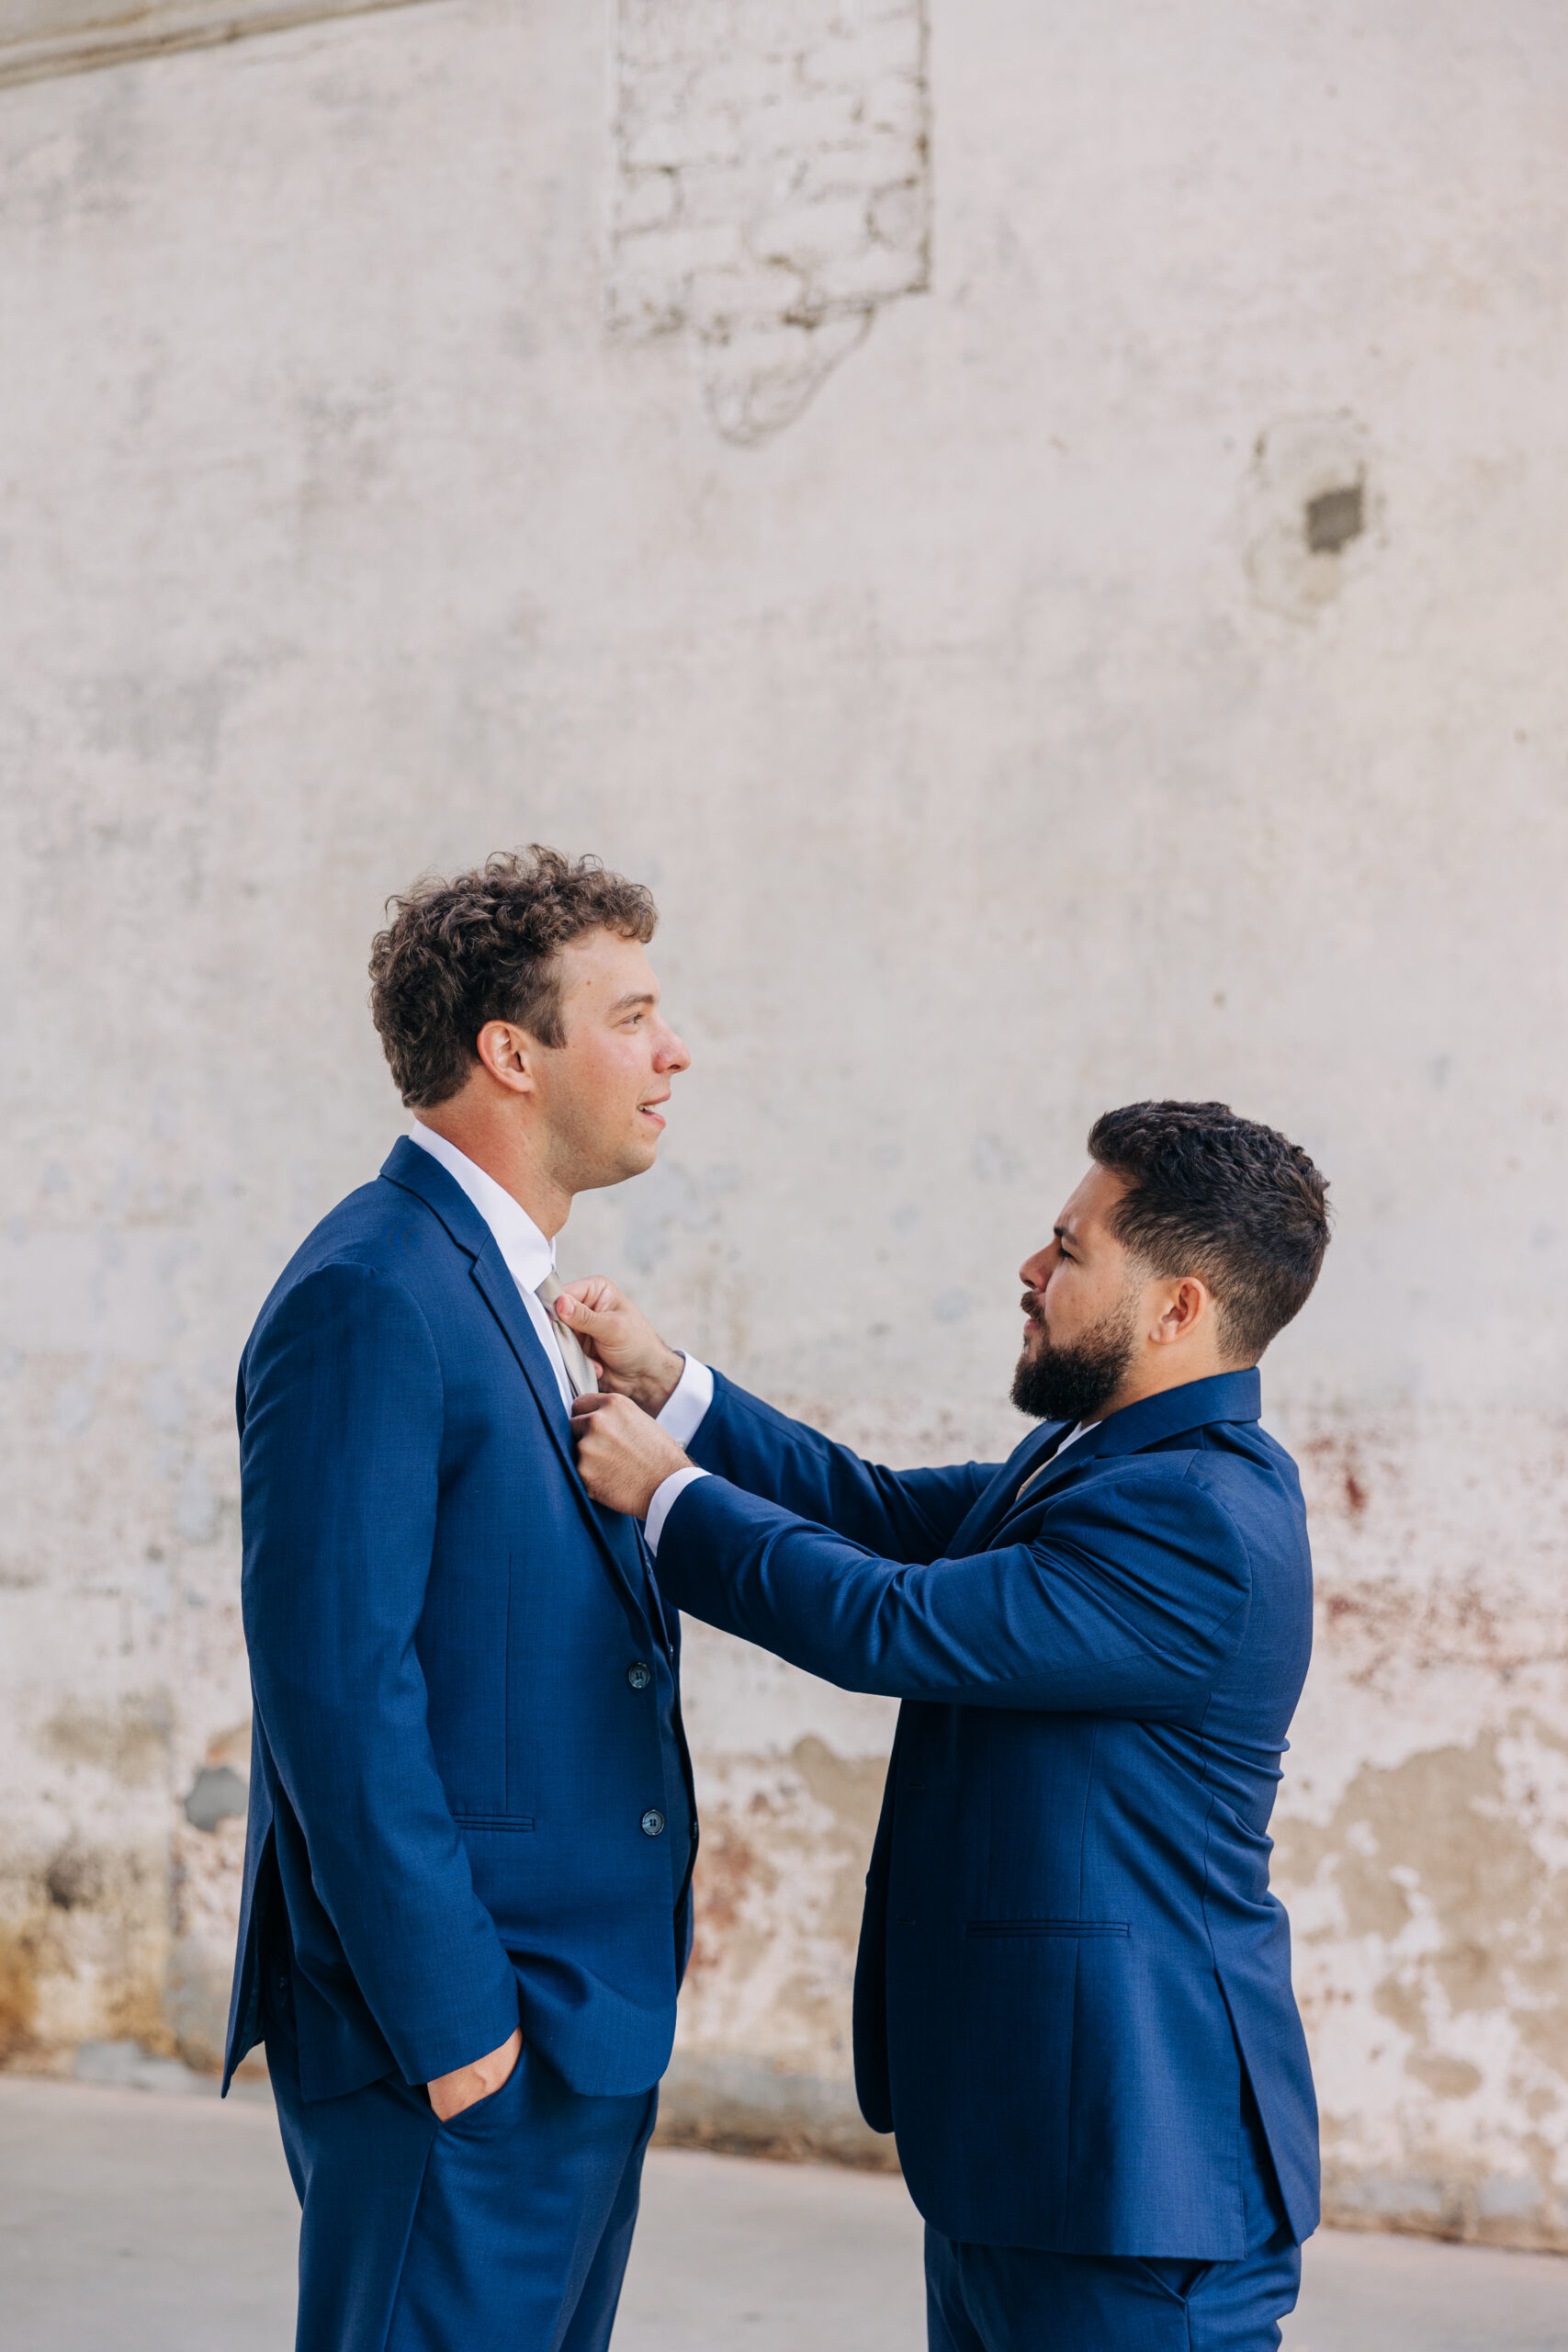 A groomsmen in a blue suit helps the groom straighten his tie in a rustic building